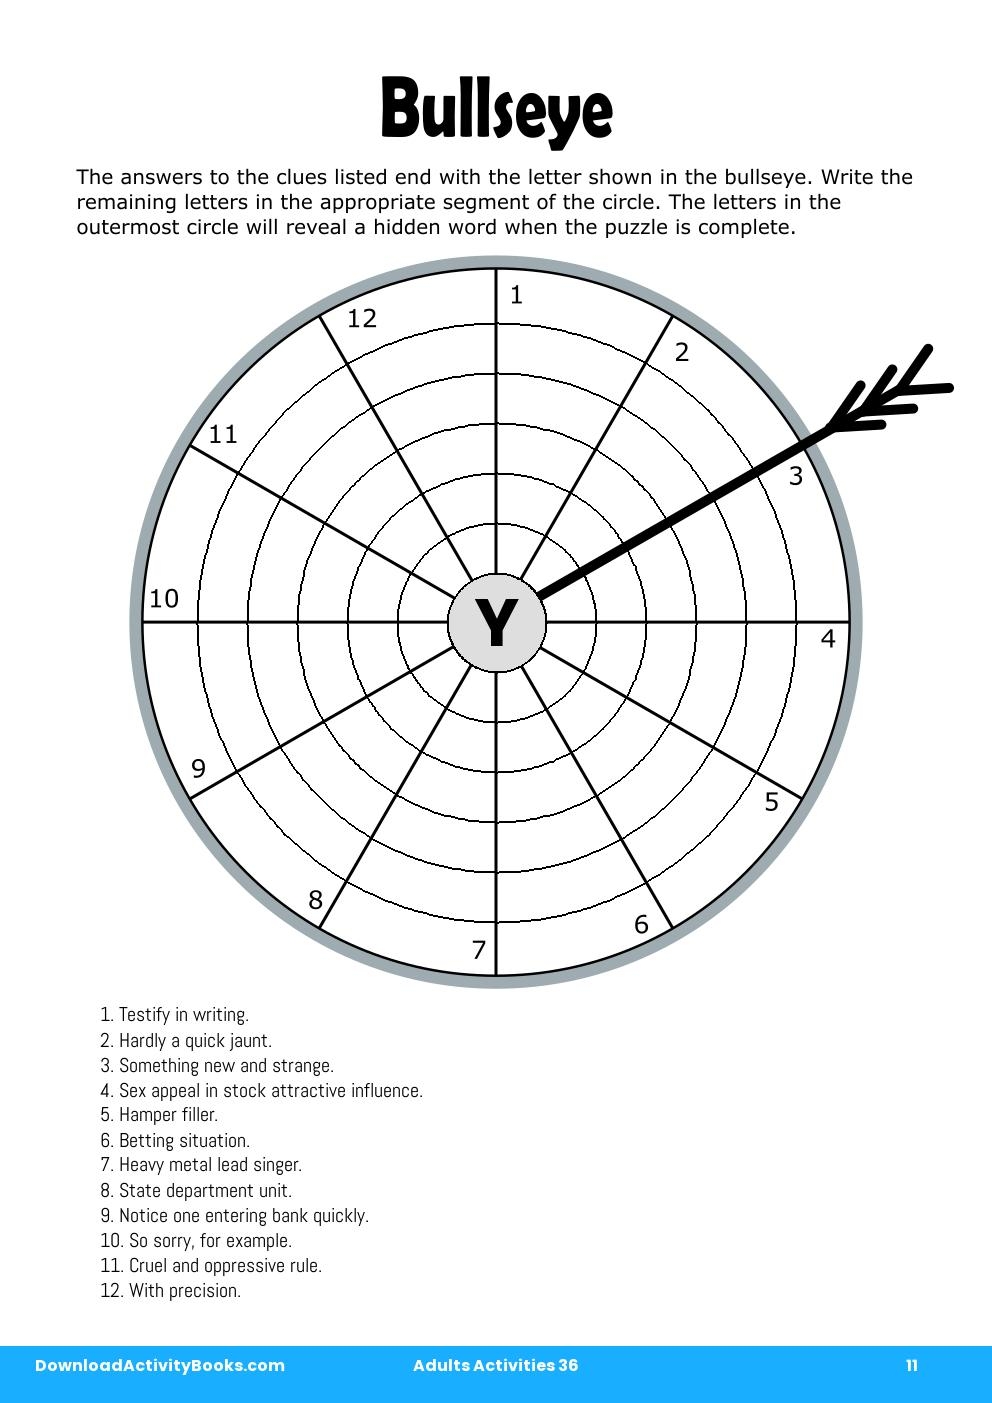 Bullseye in Adults Activities 36